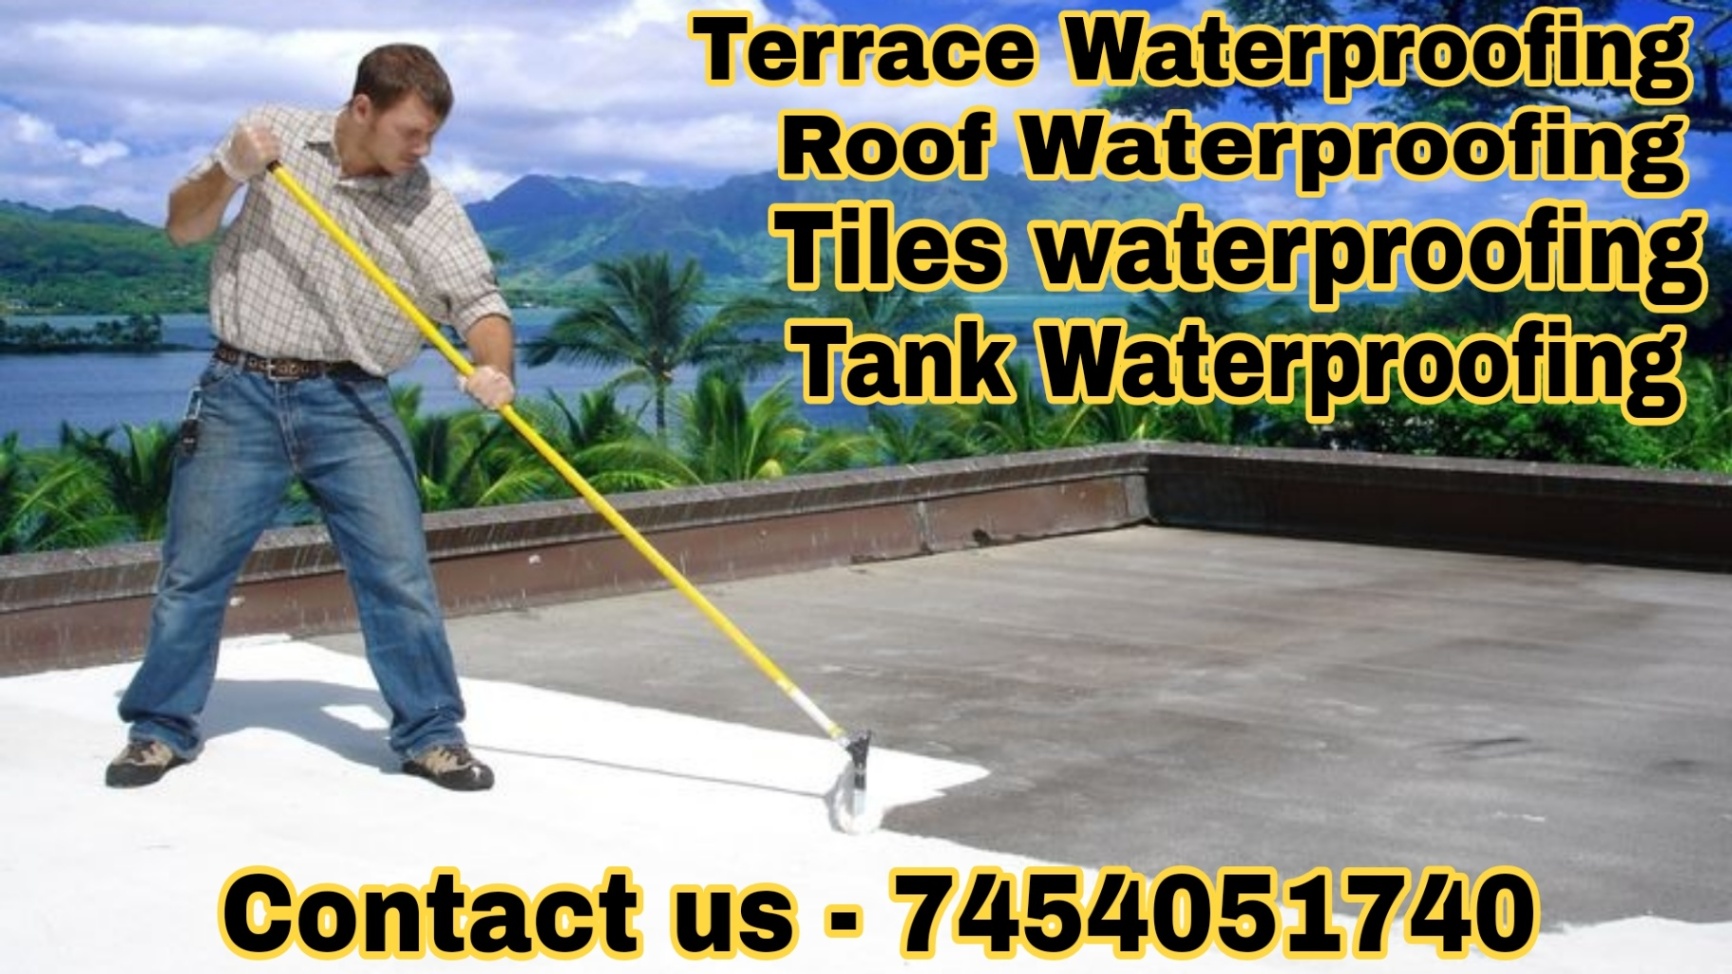 Uttarakhand Waterproofing Service - Roof and Terrace Waterproofing solution 